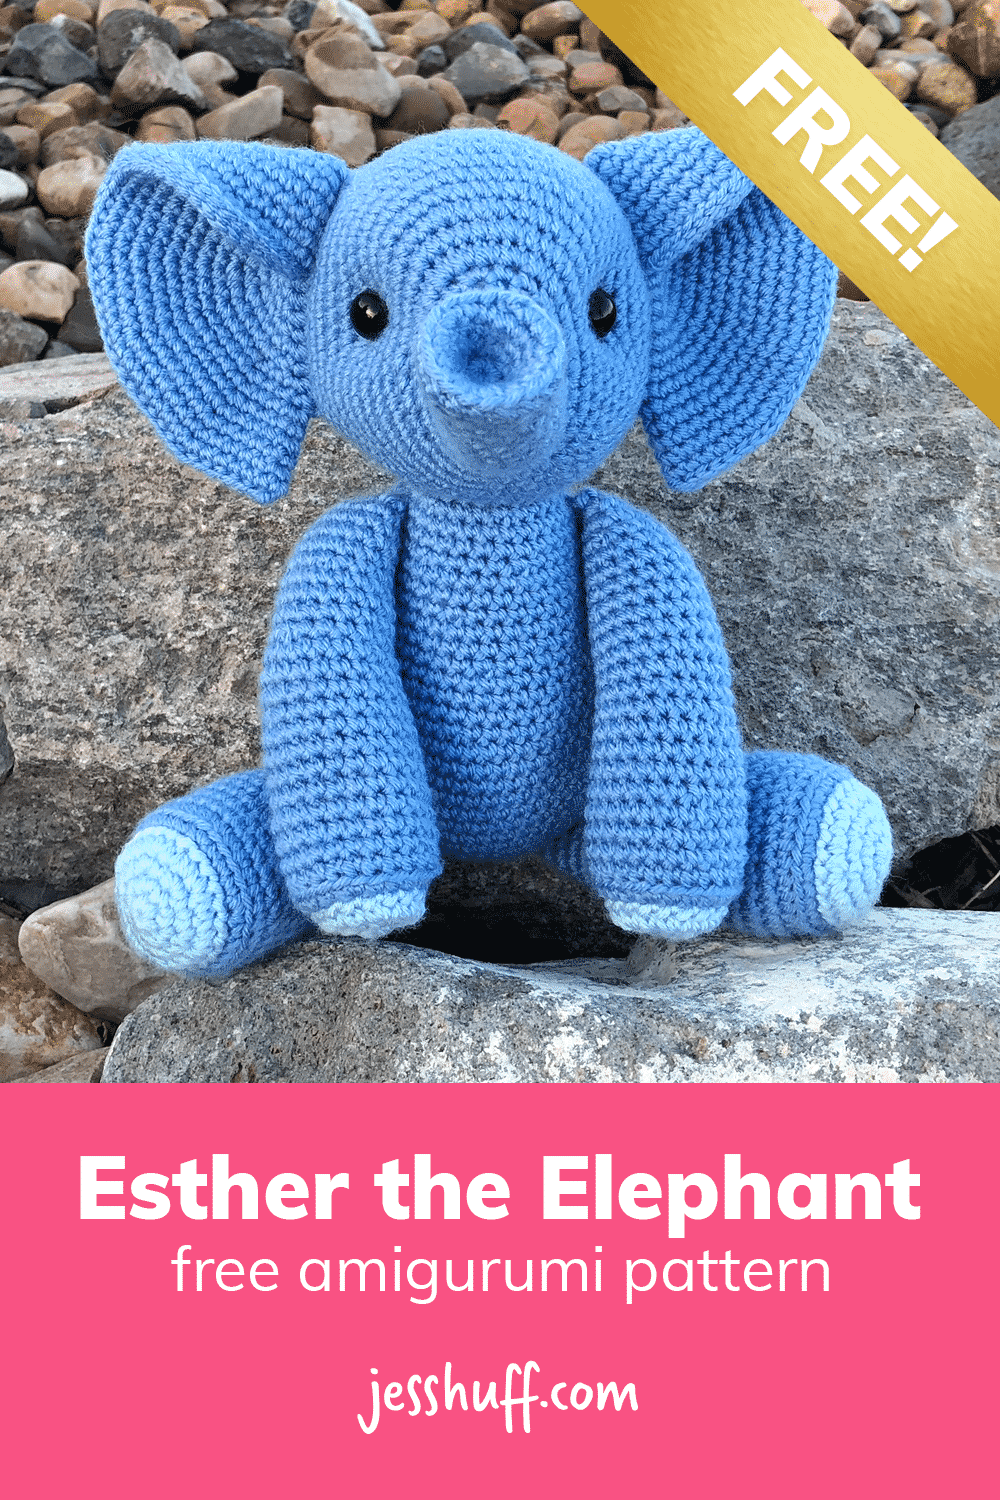 Elephant amigurumi pattern – how cute is this?? I can't believe it's free! via @heyjesshuff